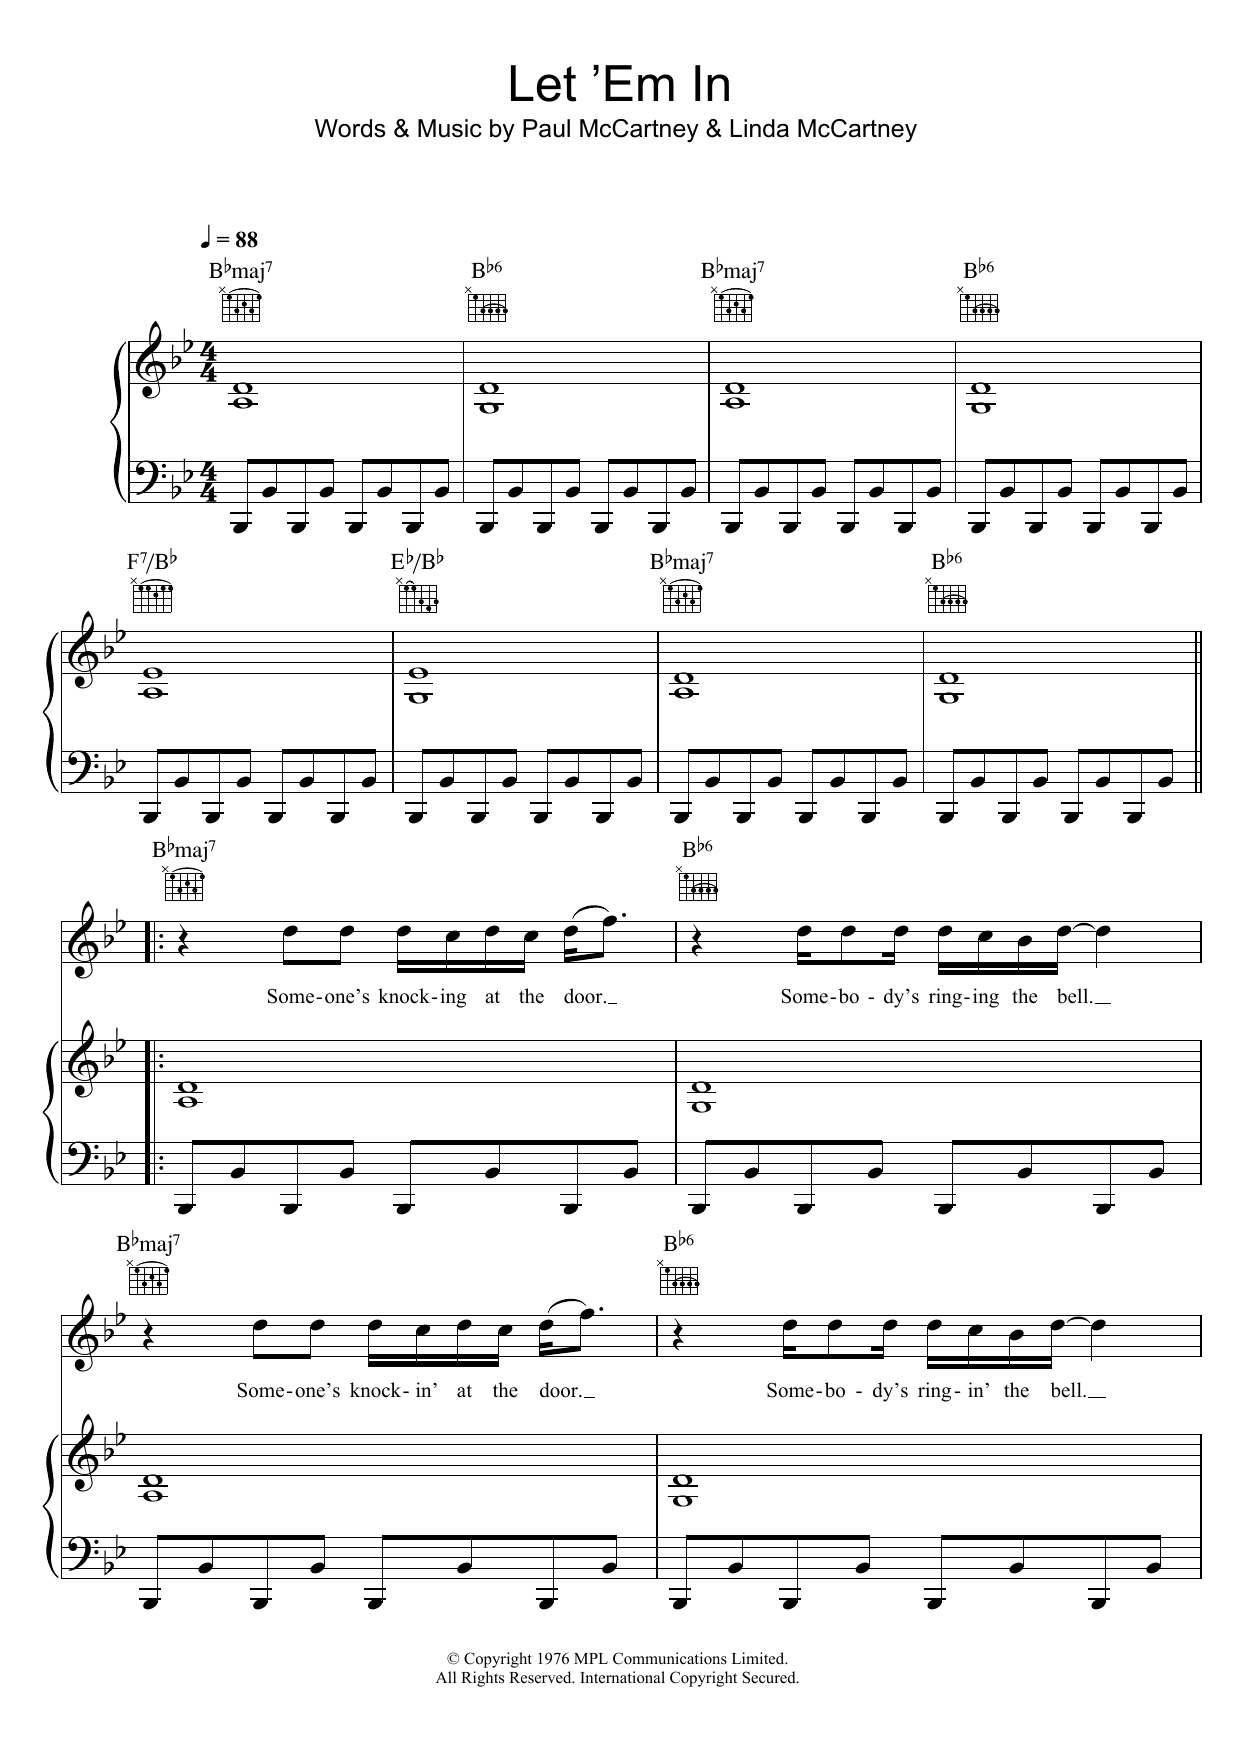 Wings Let 'Em In Sheet Music Notes & Chords for Guitar Chords/Lyrics - Download or Print PDF